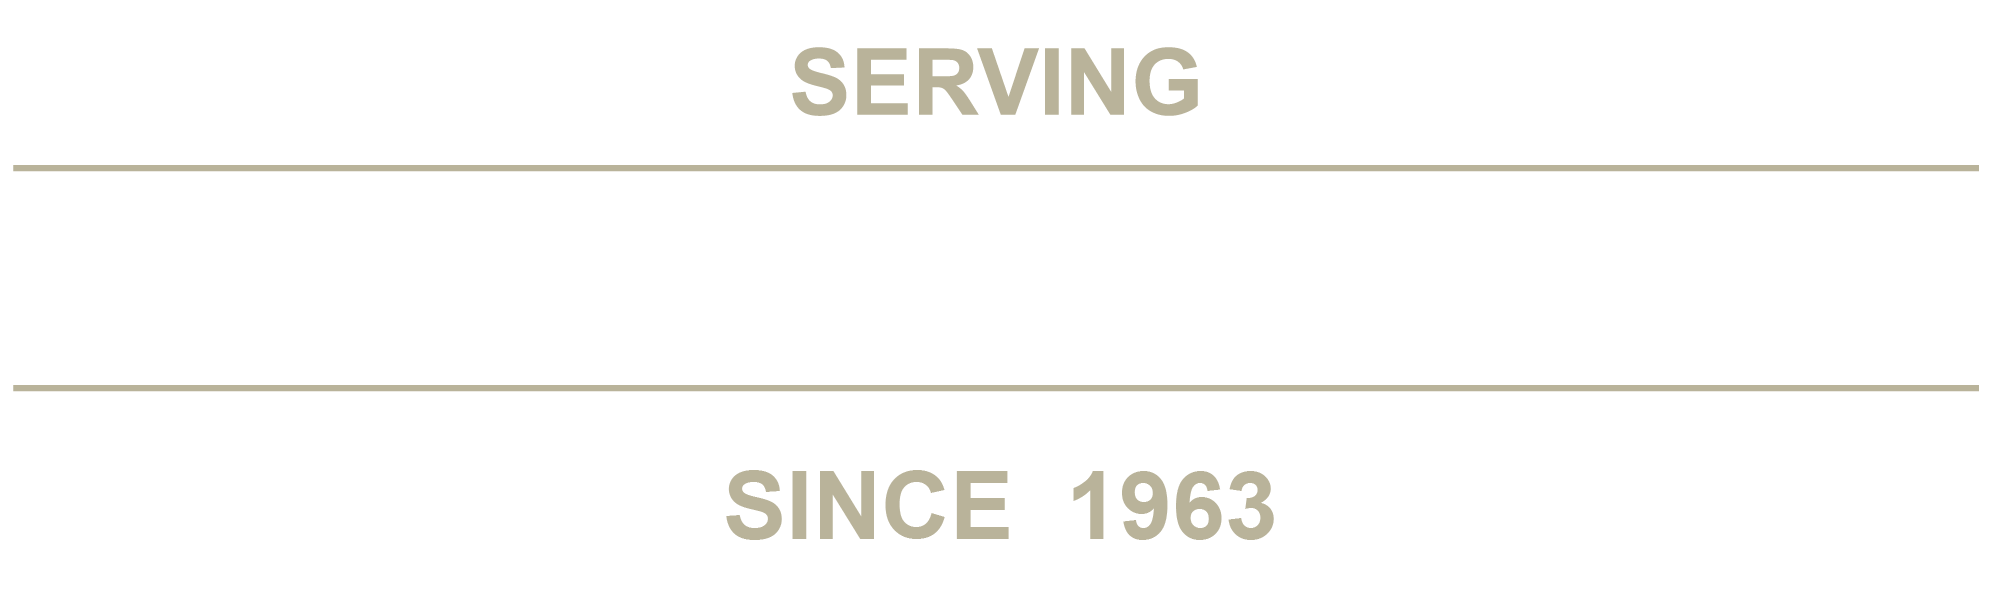 Village Automotive Group Serving The Great Boston Area Since 1963